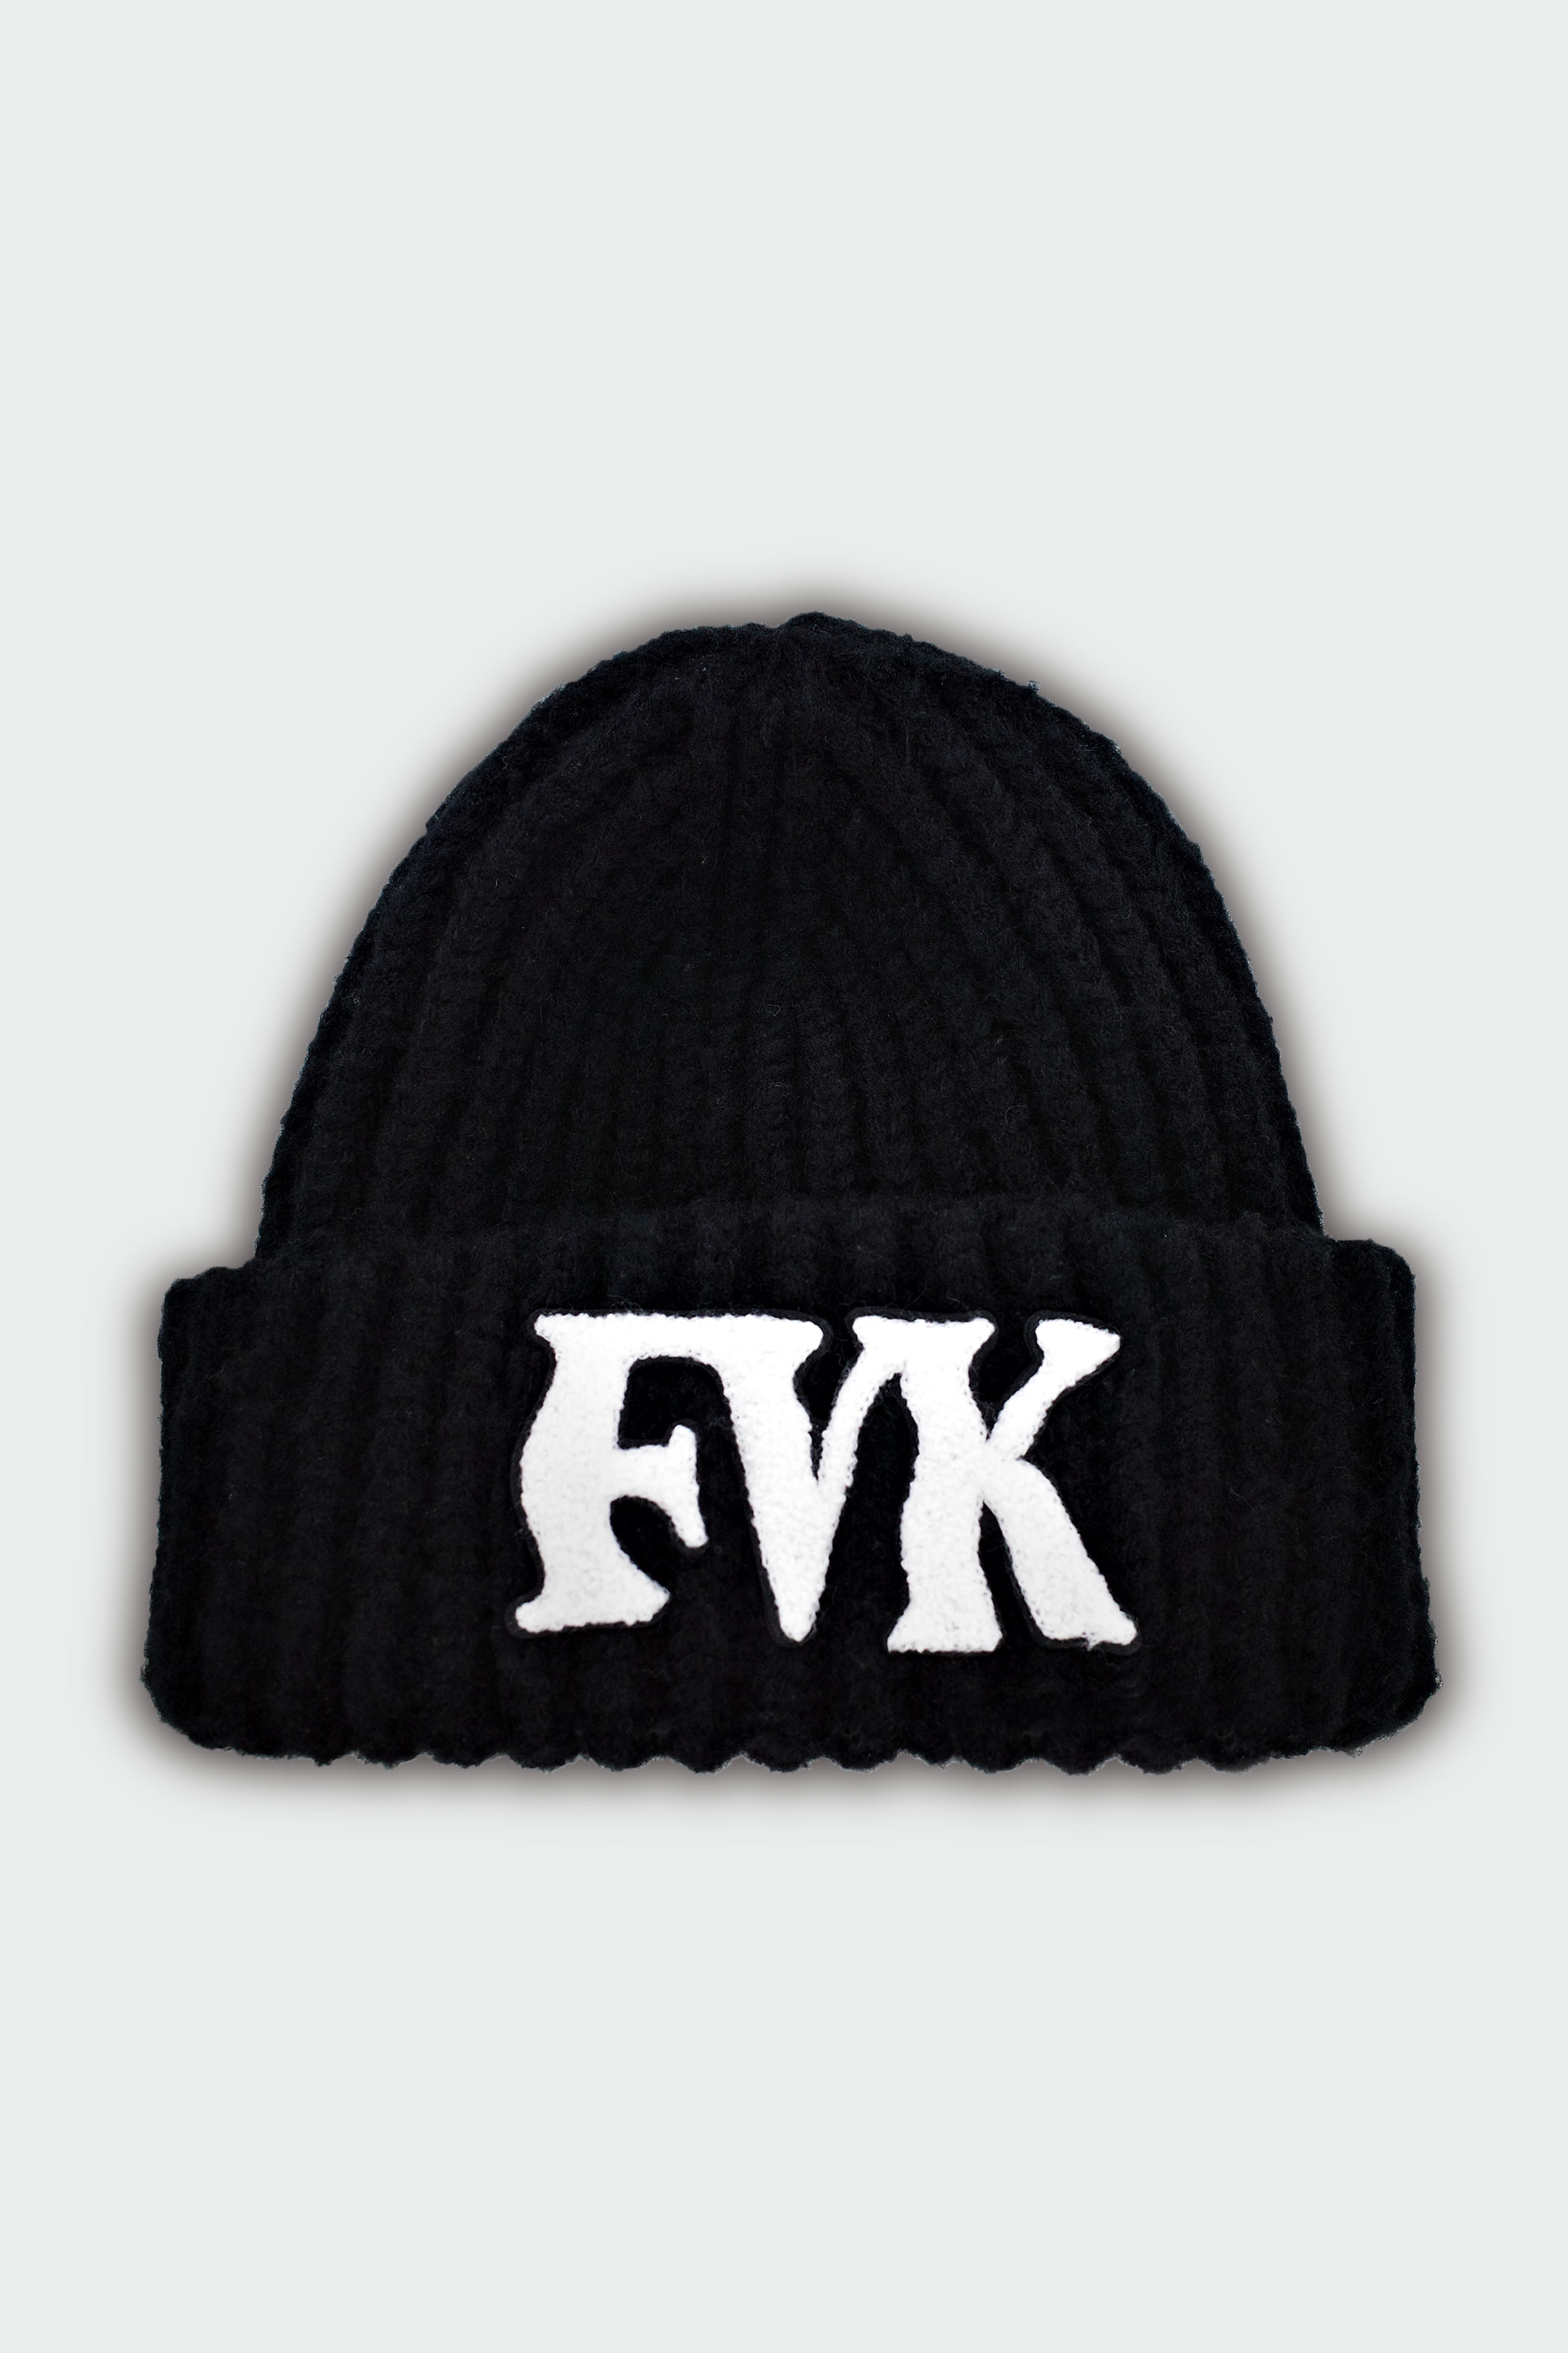 FVK logo beanie (black)